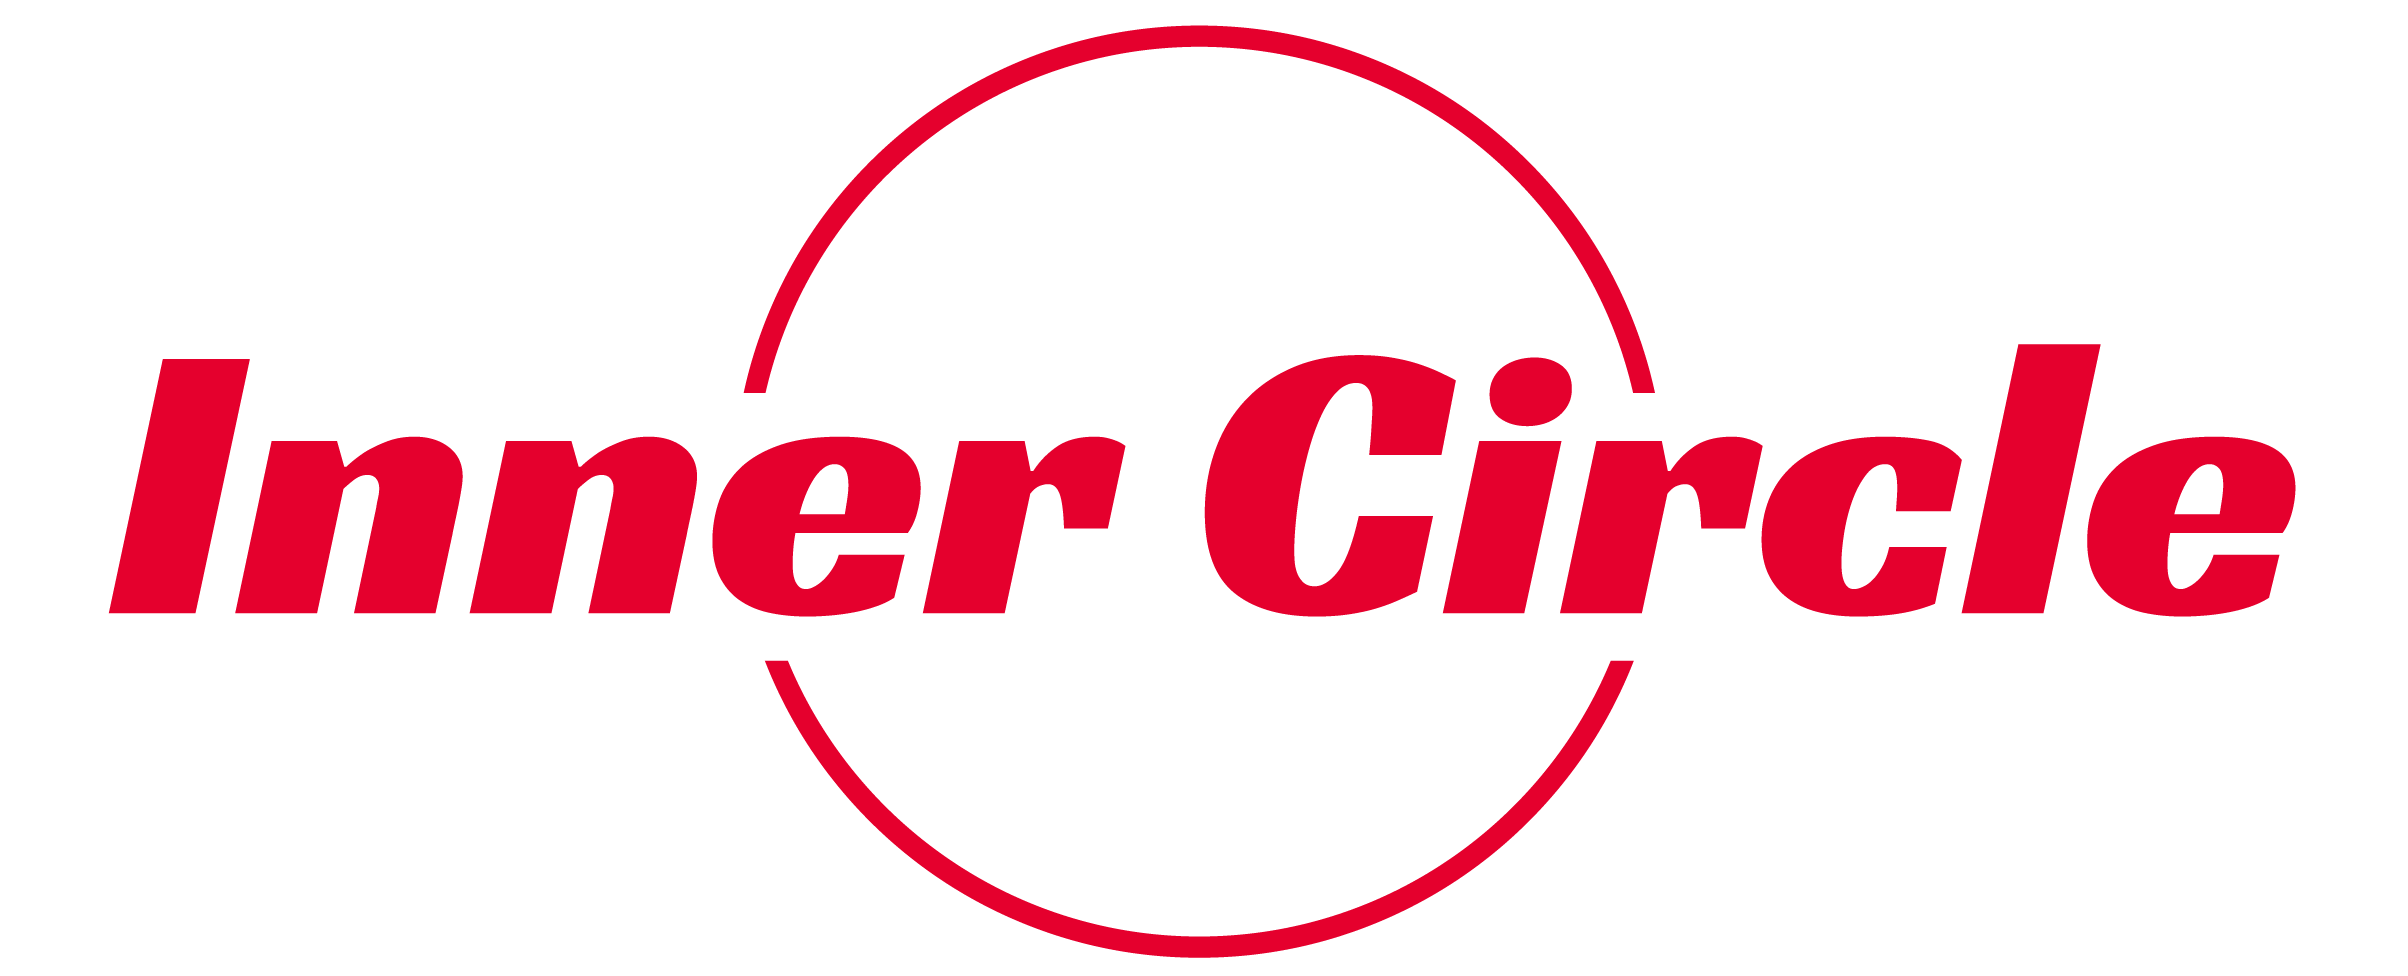 InnerCircle-Network-Logo